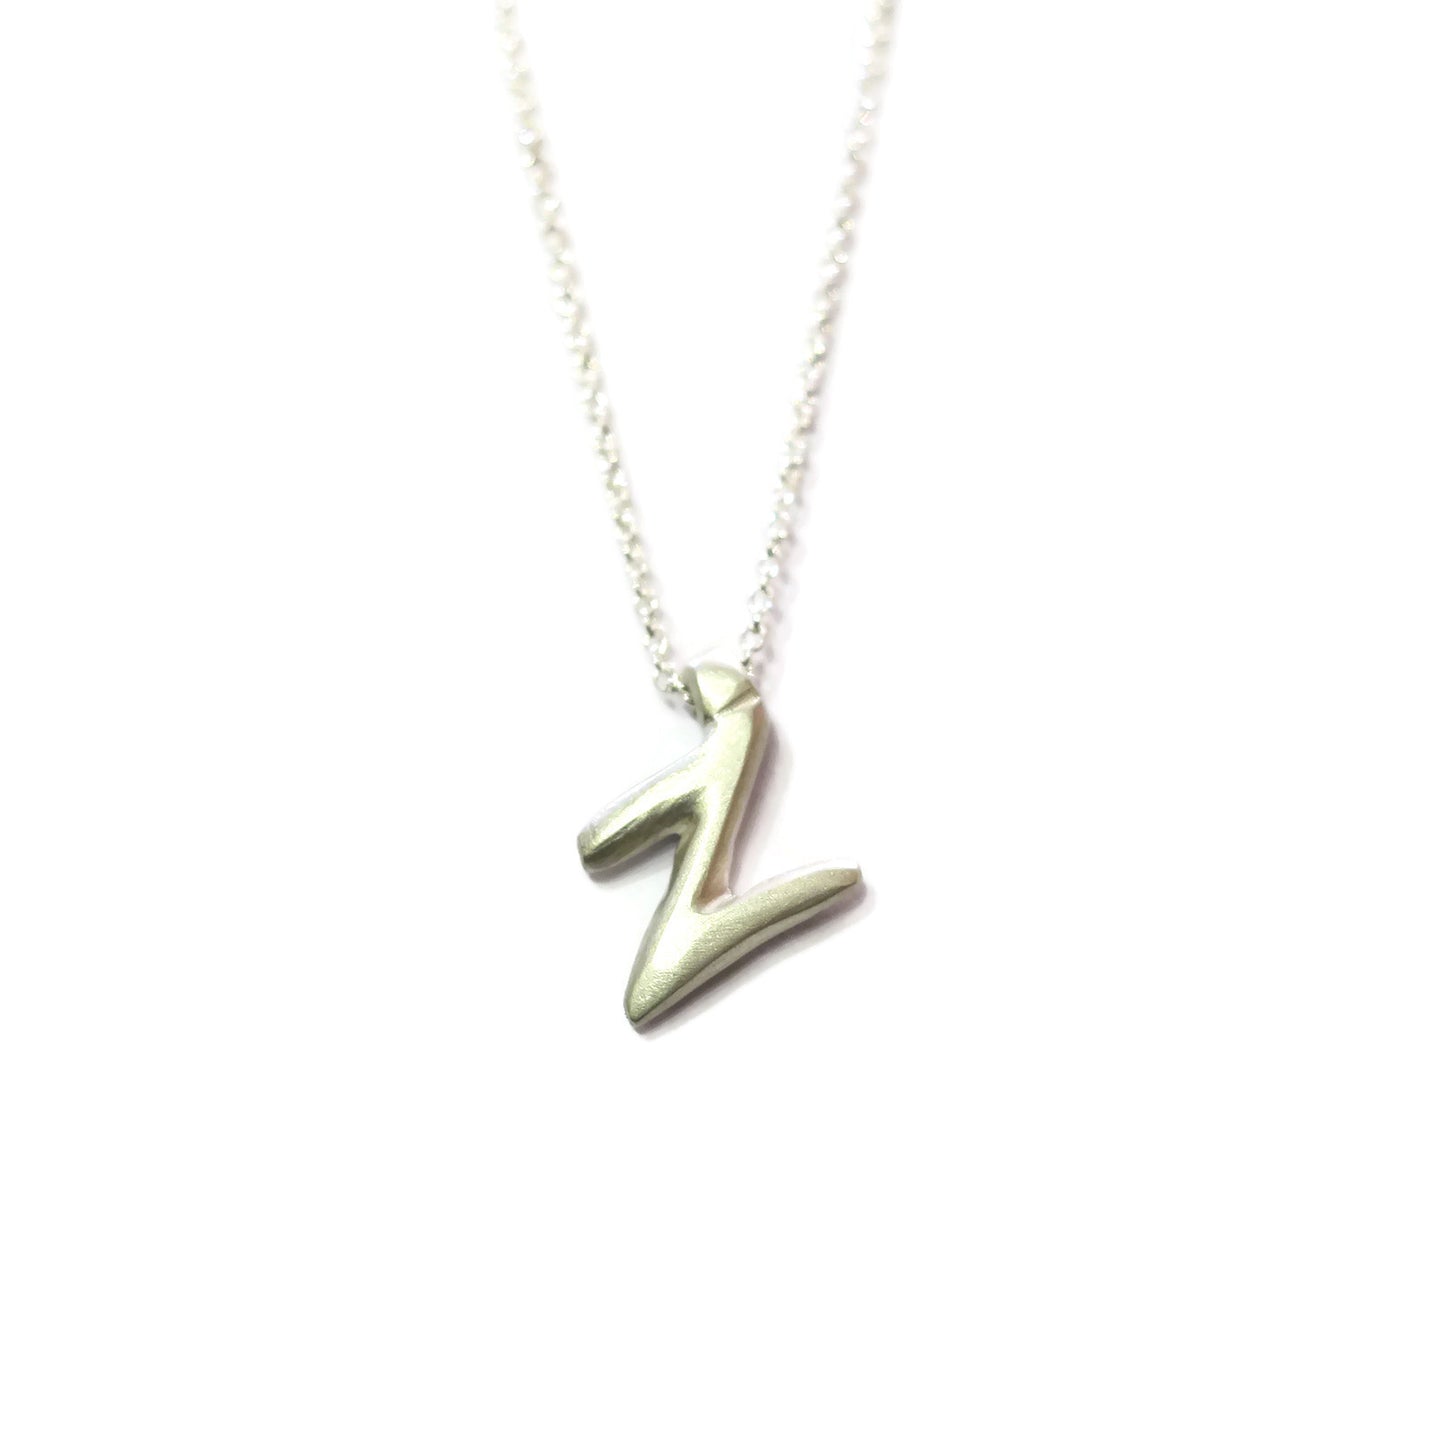 Z - handwritten letter necklace